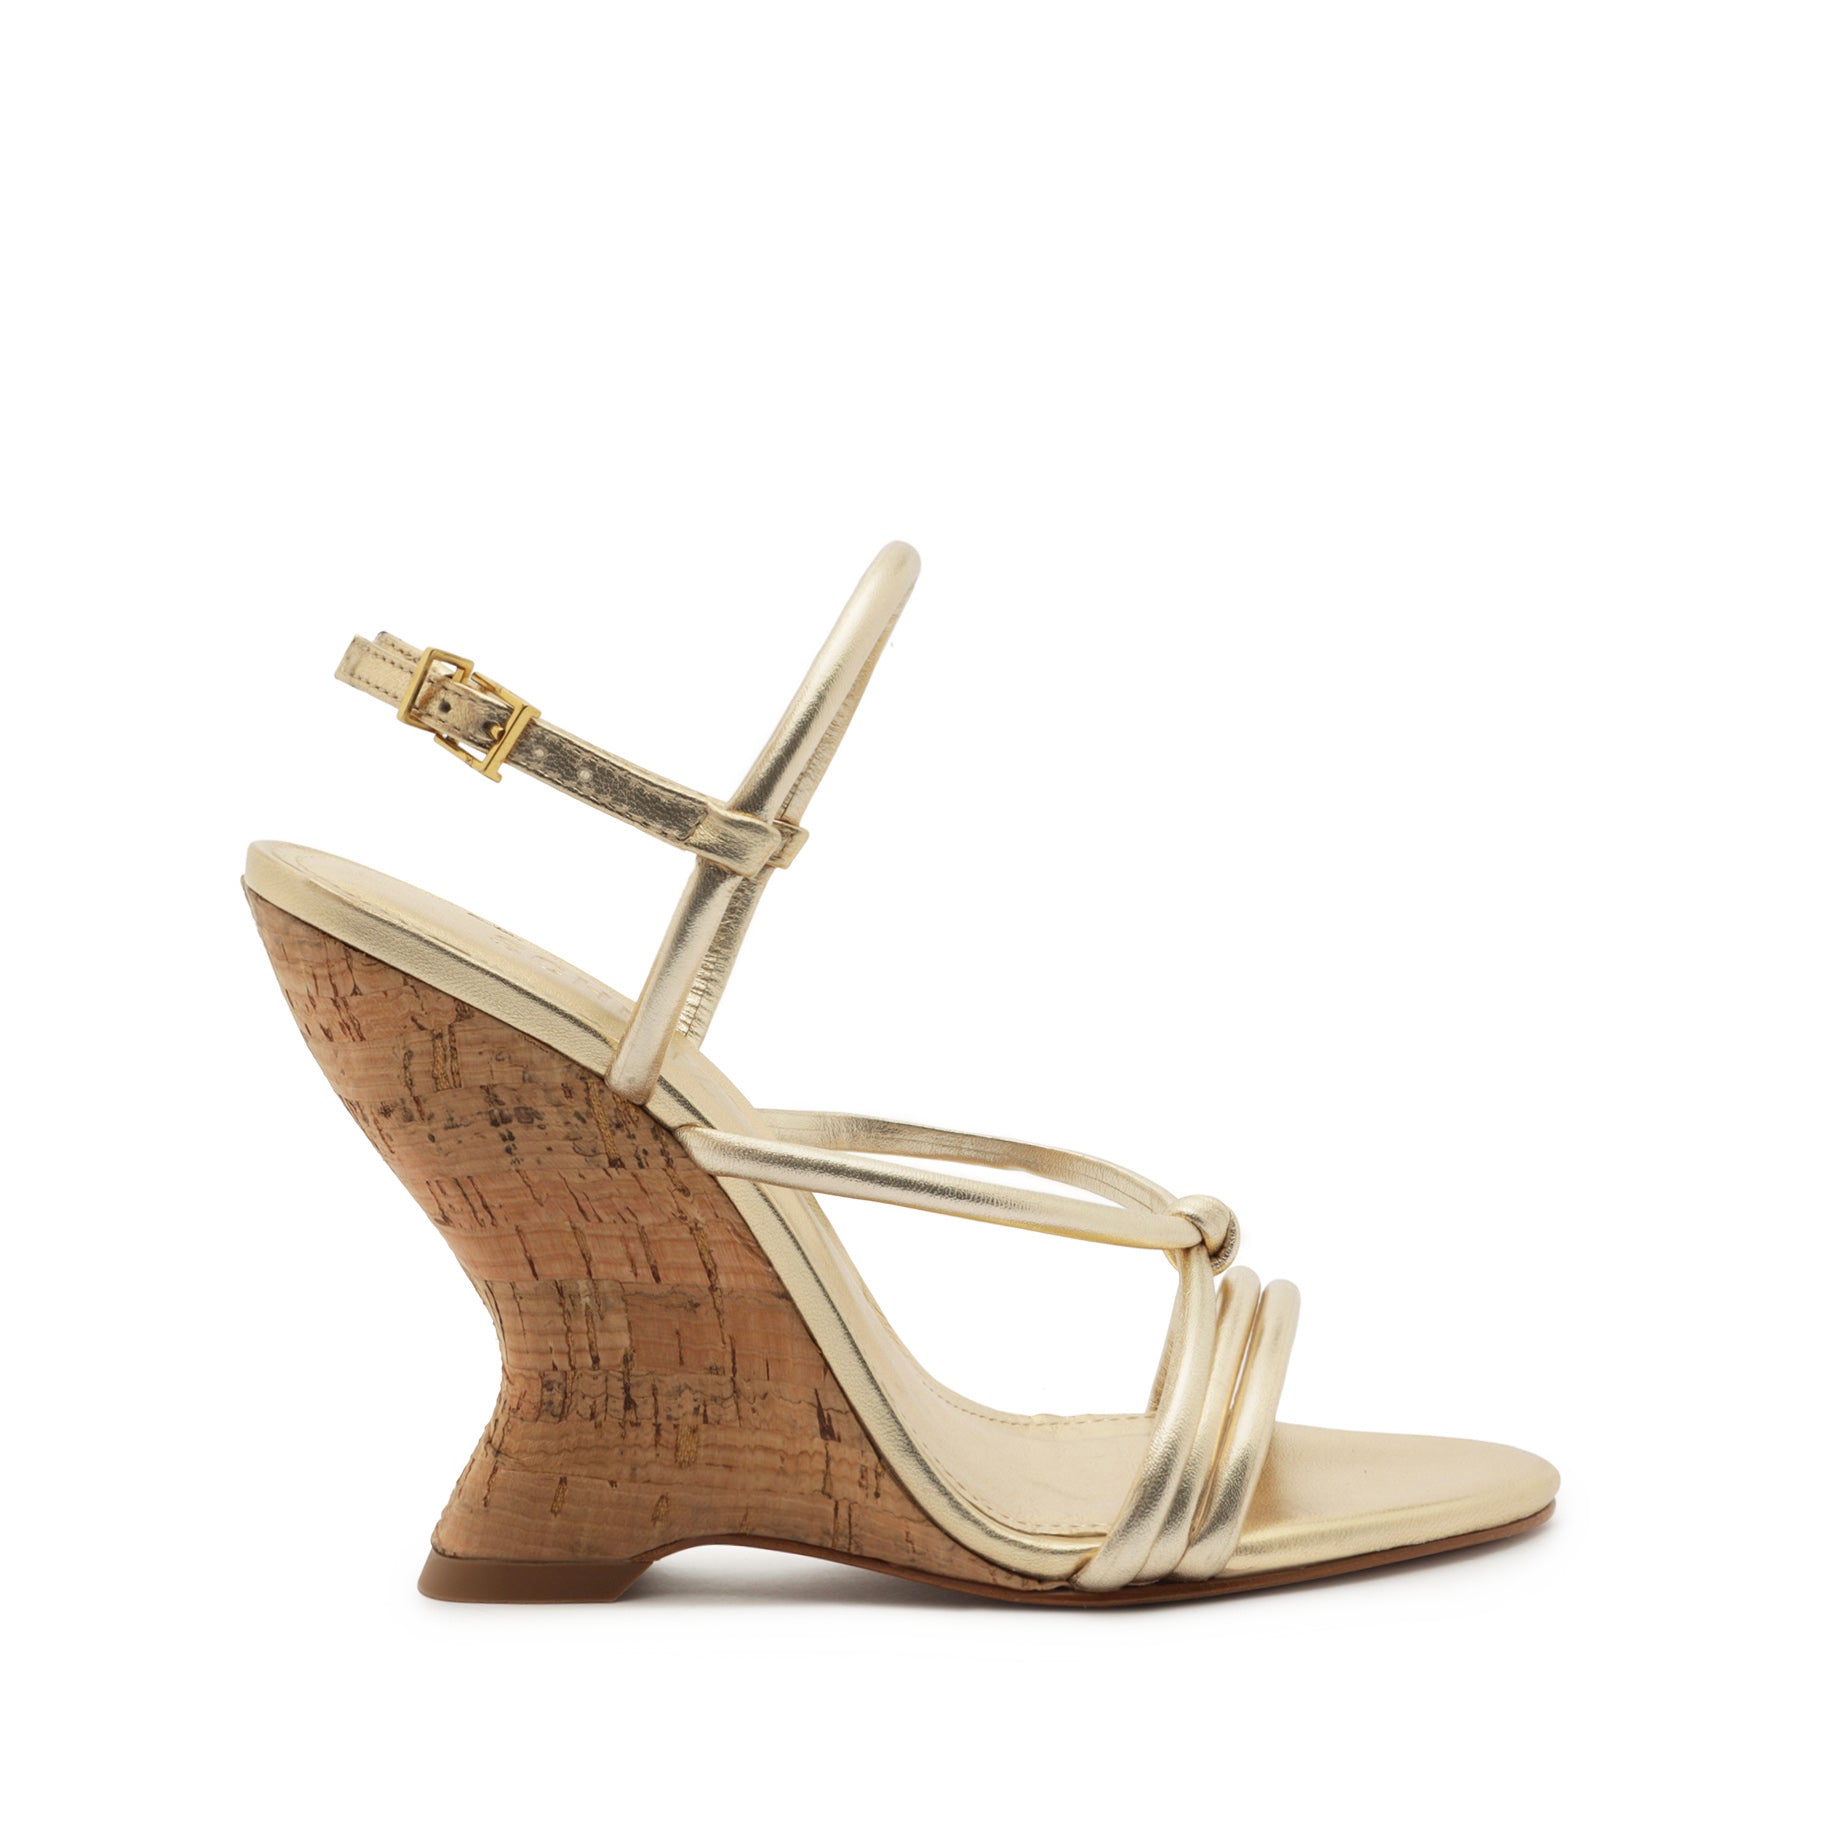 Louis Vuitton Damier Patent Leather Kitten Heel Mules Sandals US 7.5 Women